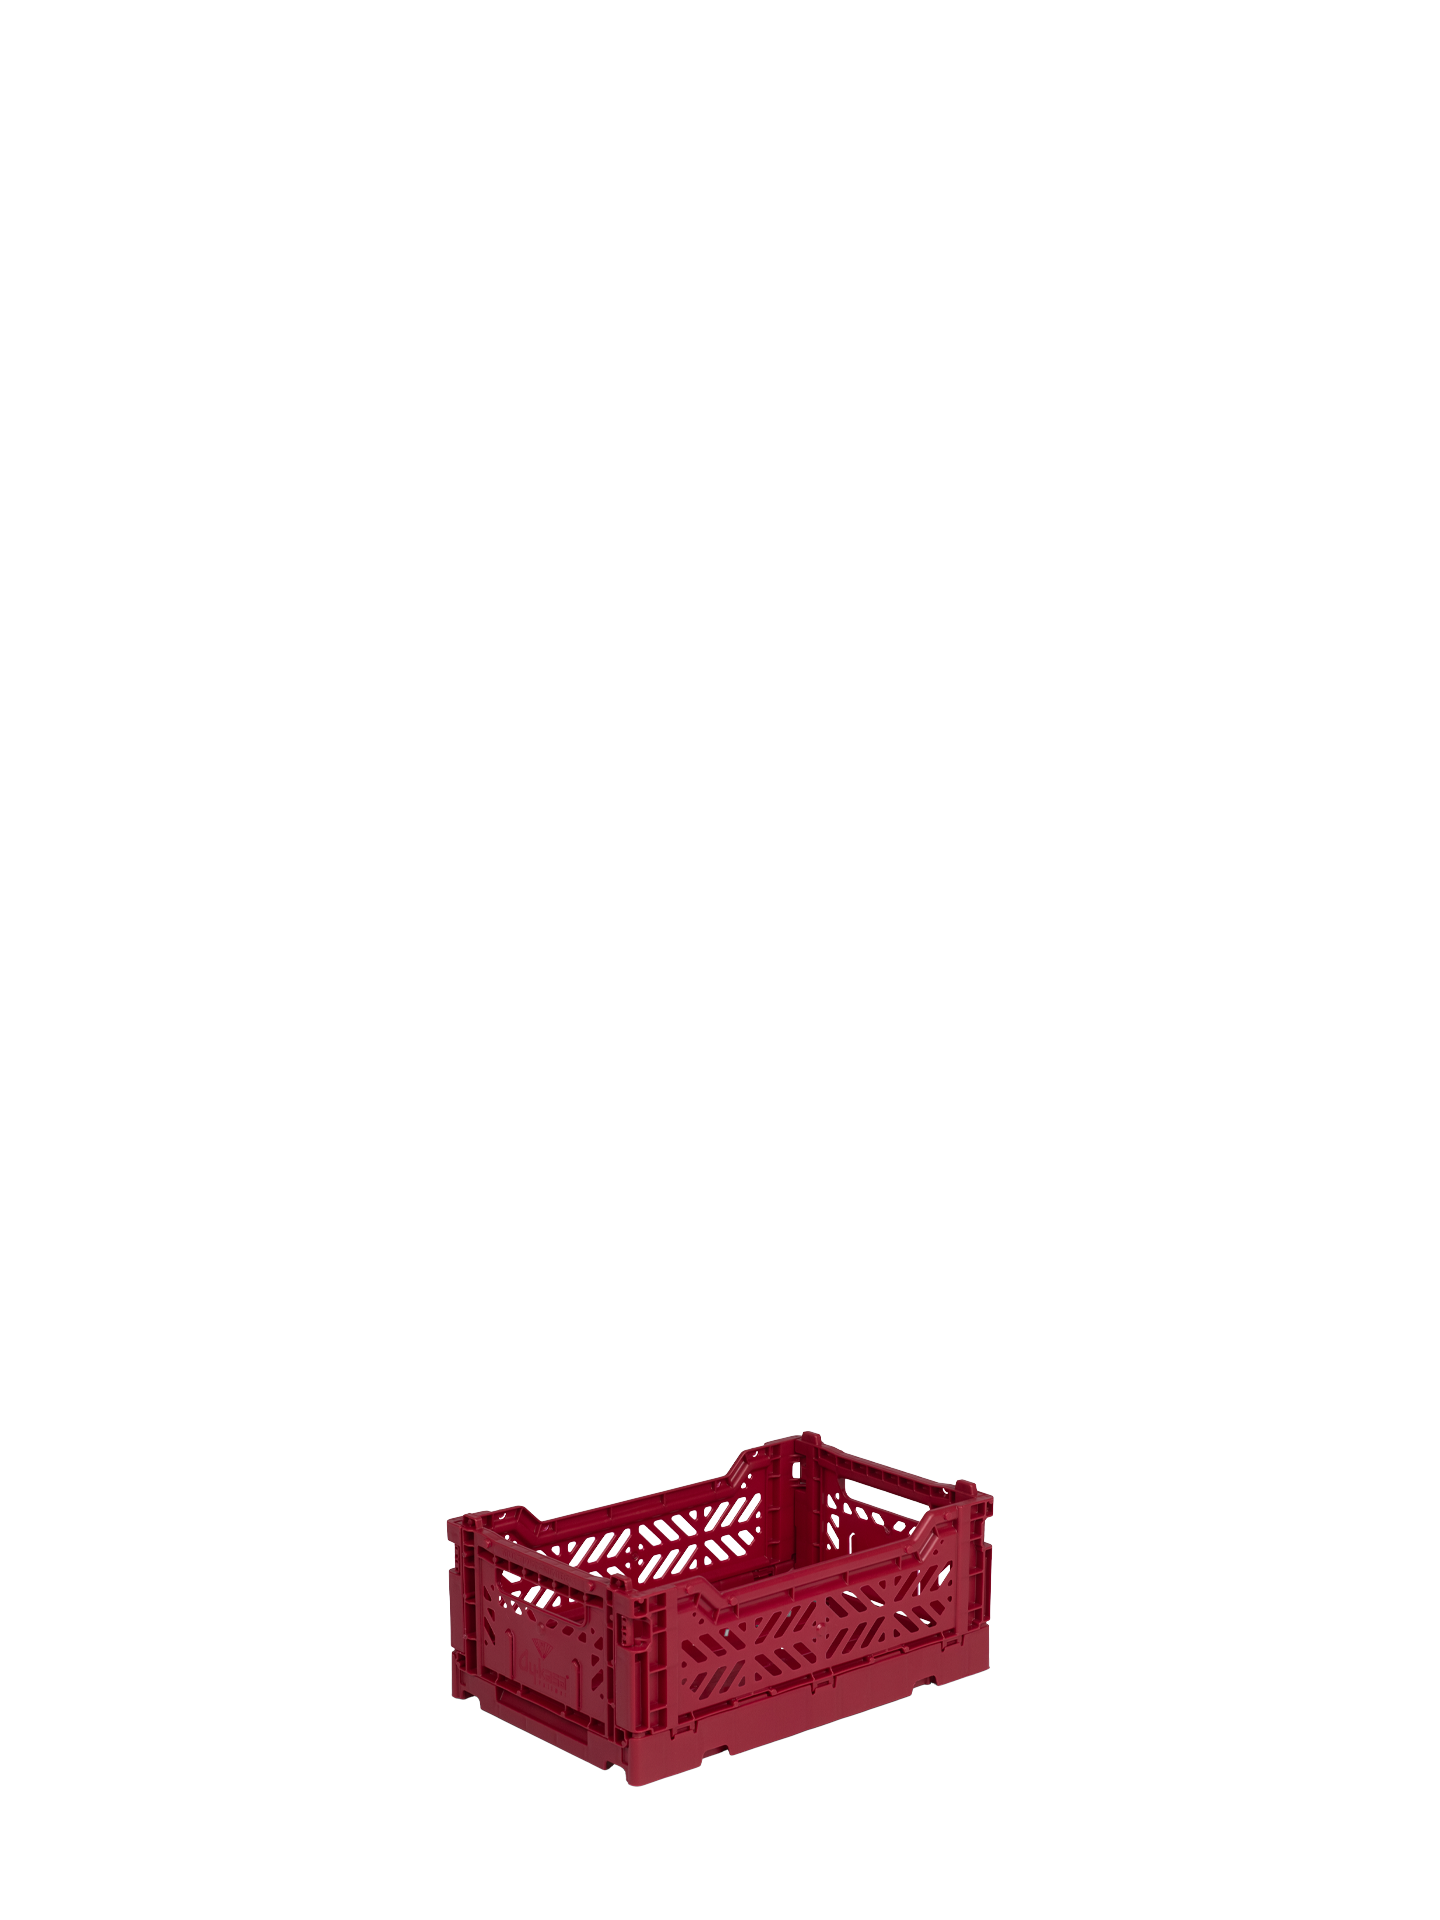 Mini Aykasa crate in dark red chili pepper stacks and folds